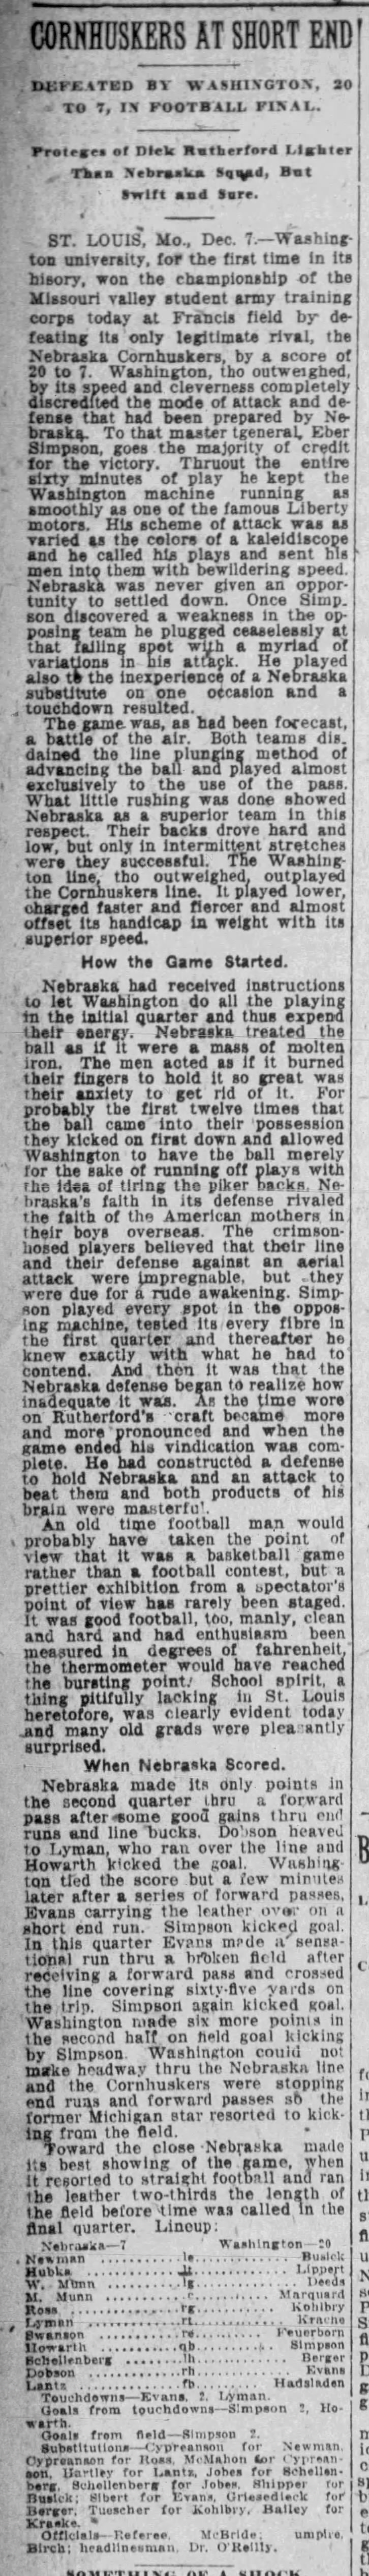 1918 Nebraska @ Washington St. Louis football, Nebraska State Journal